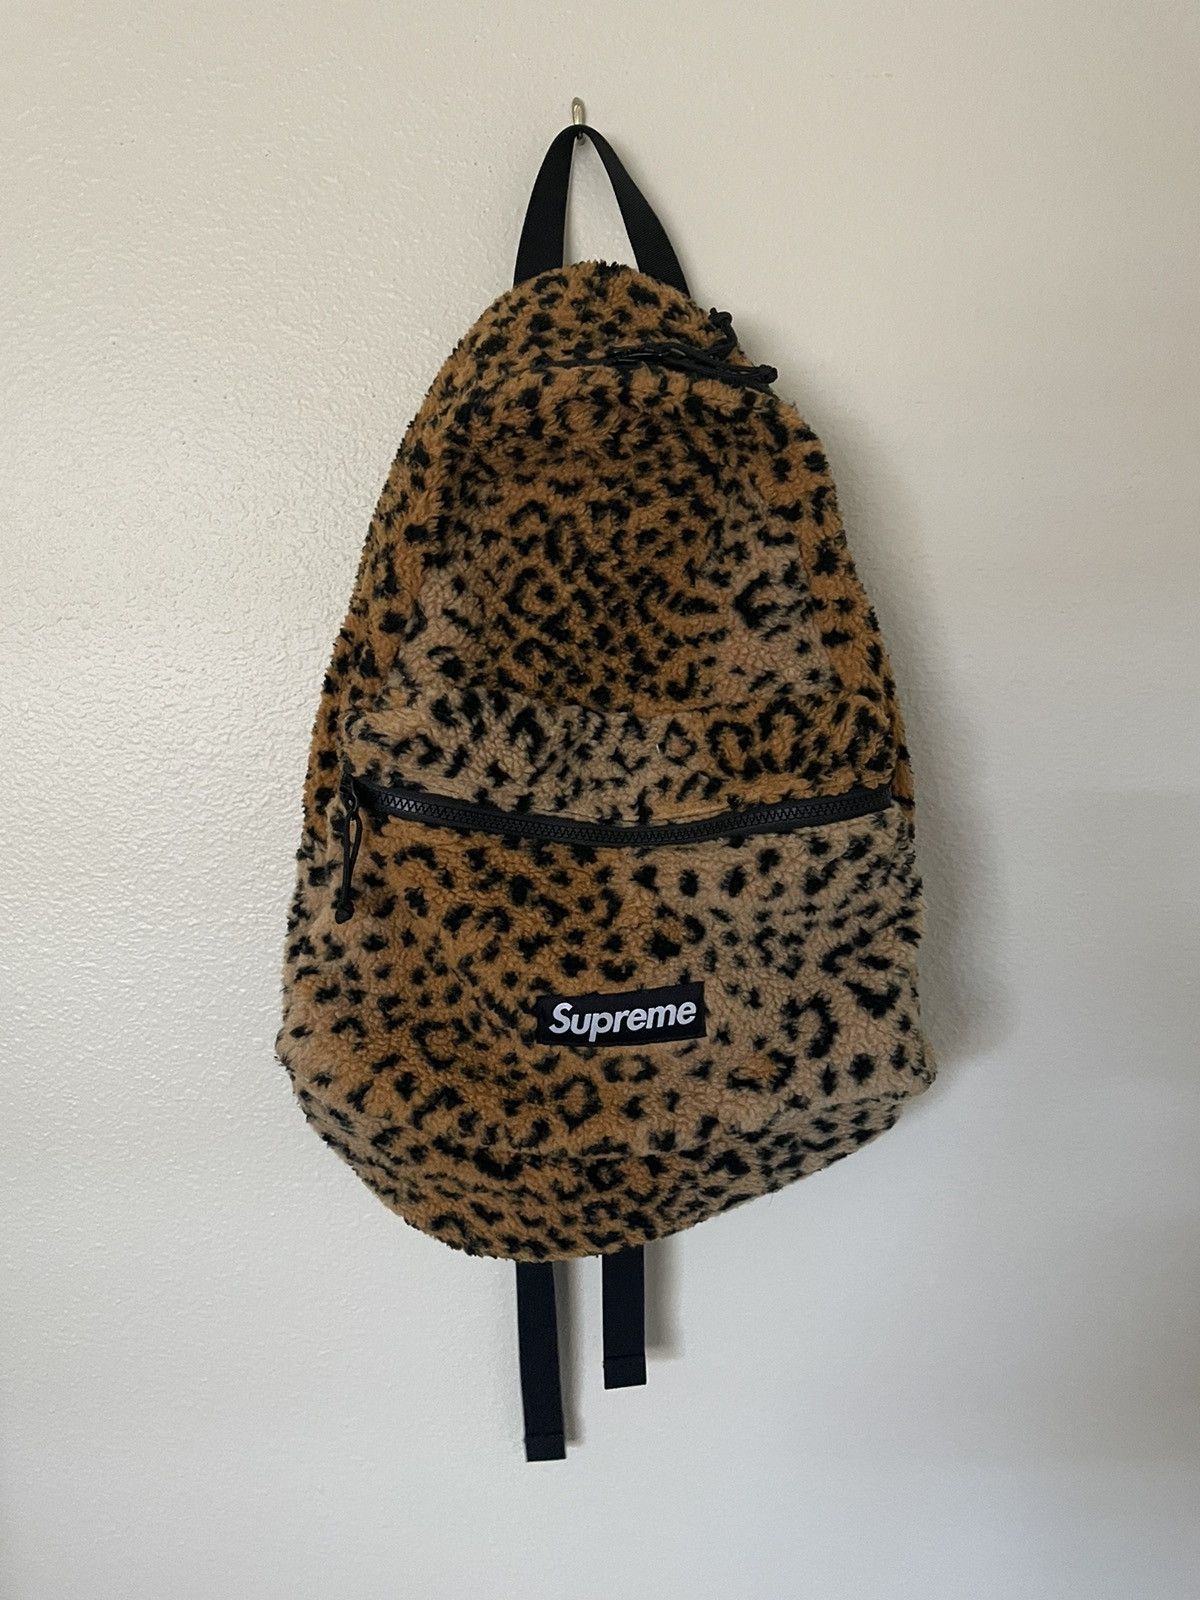 Supreme Supreme Cheetah Backpack | Grailed